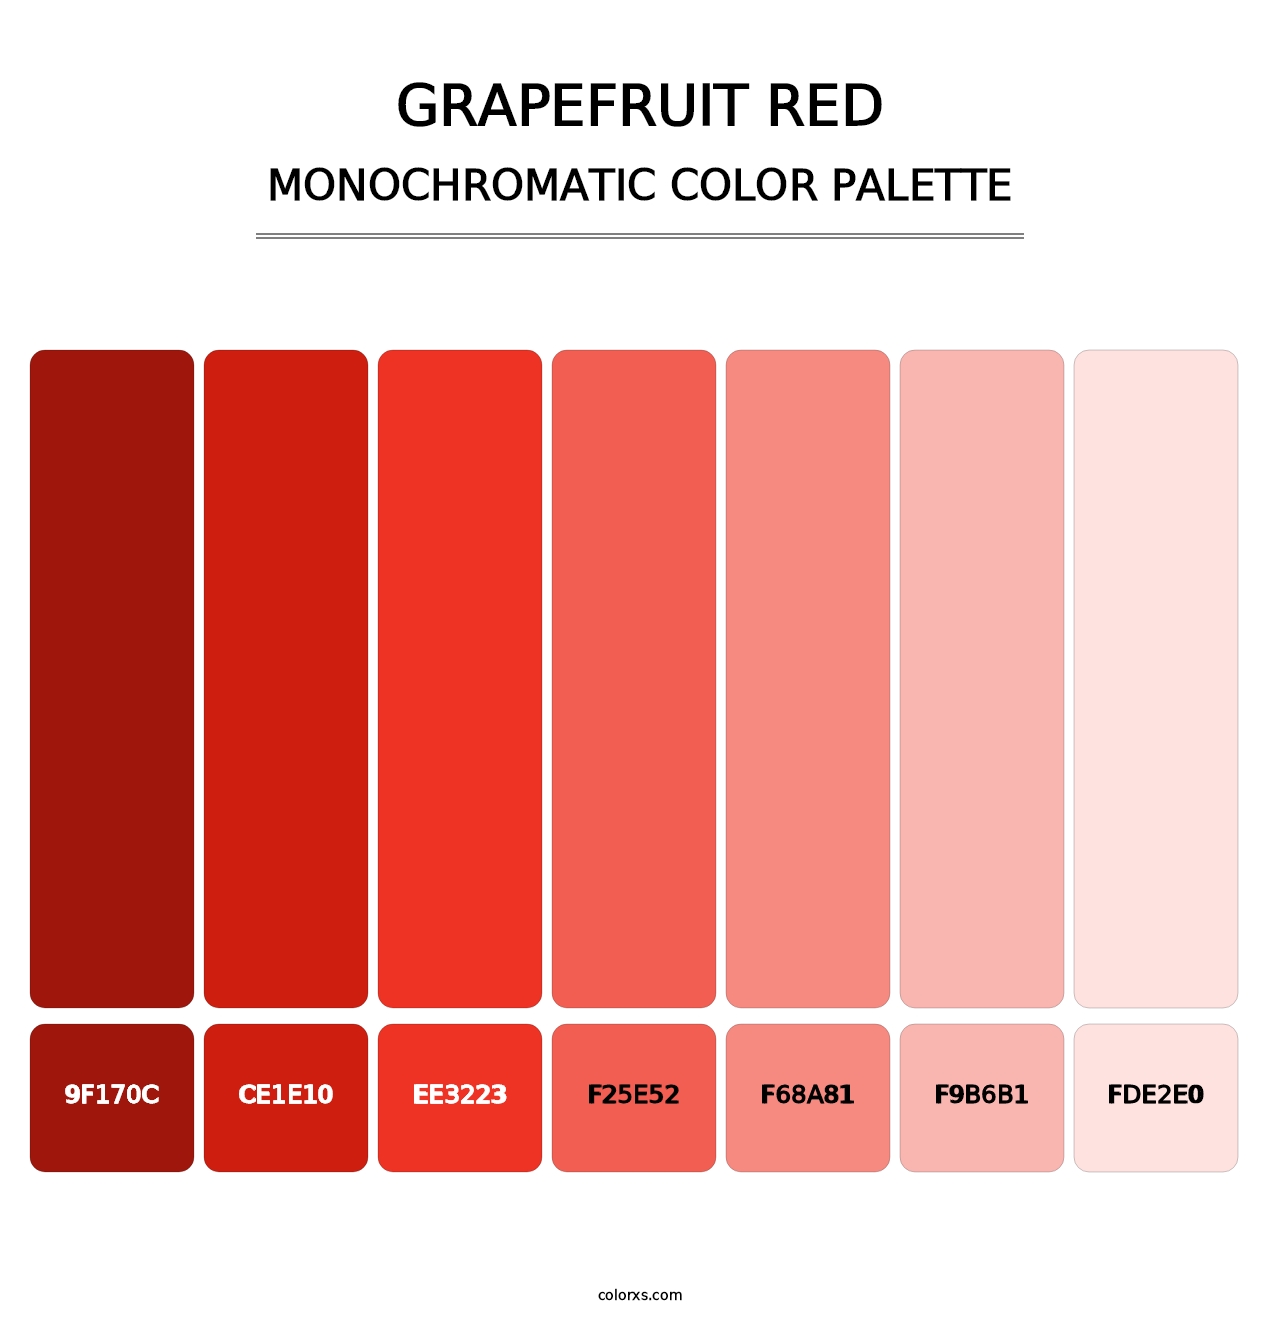 Grapefruit Red - Monochromatic Color Palette